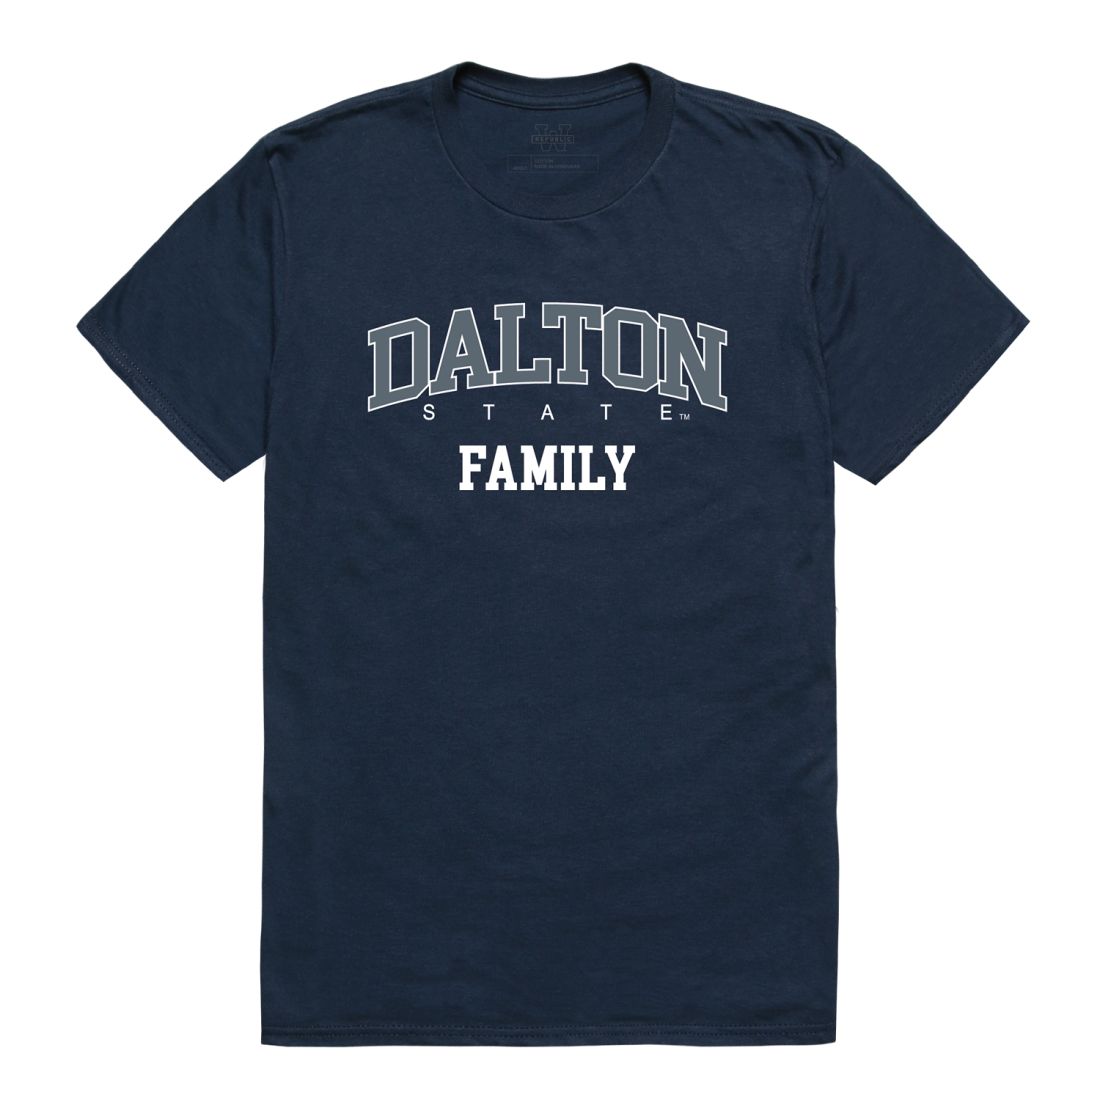 Dalton State College Roadrunners Family T-Shirt